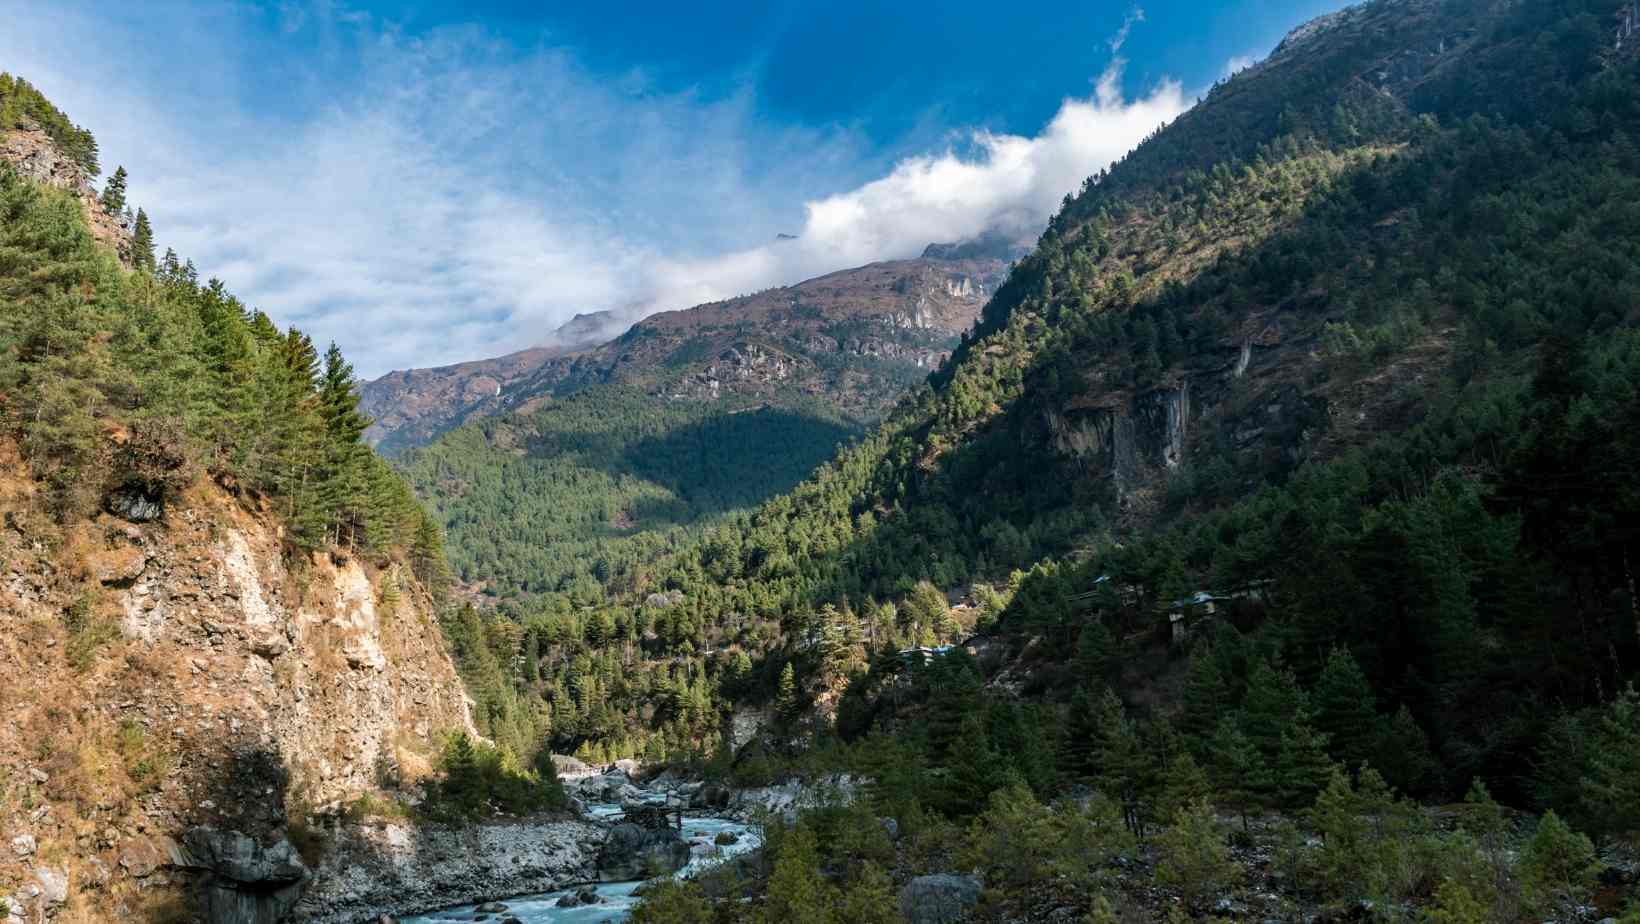 Kosi river, Uttarakhand